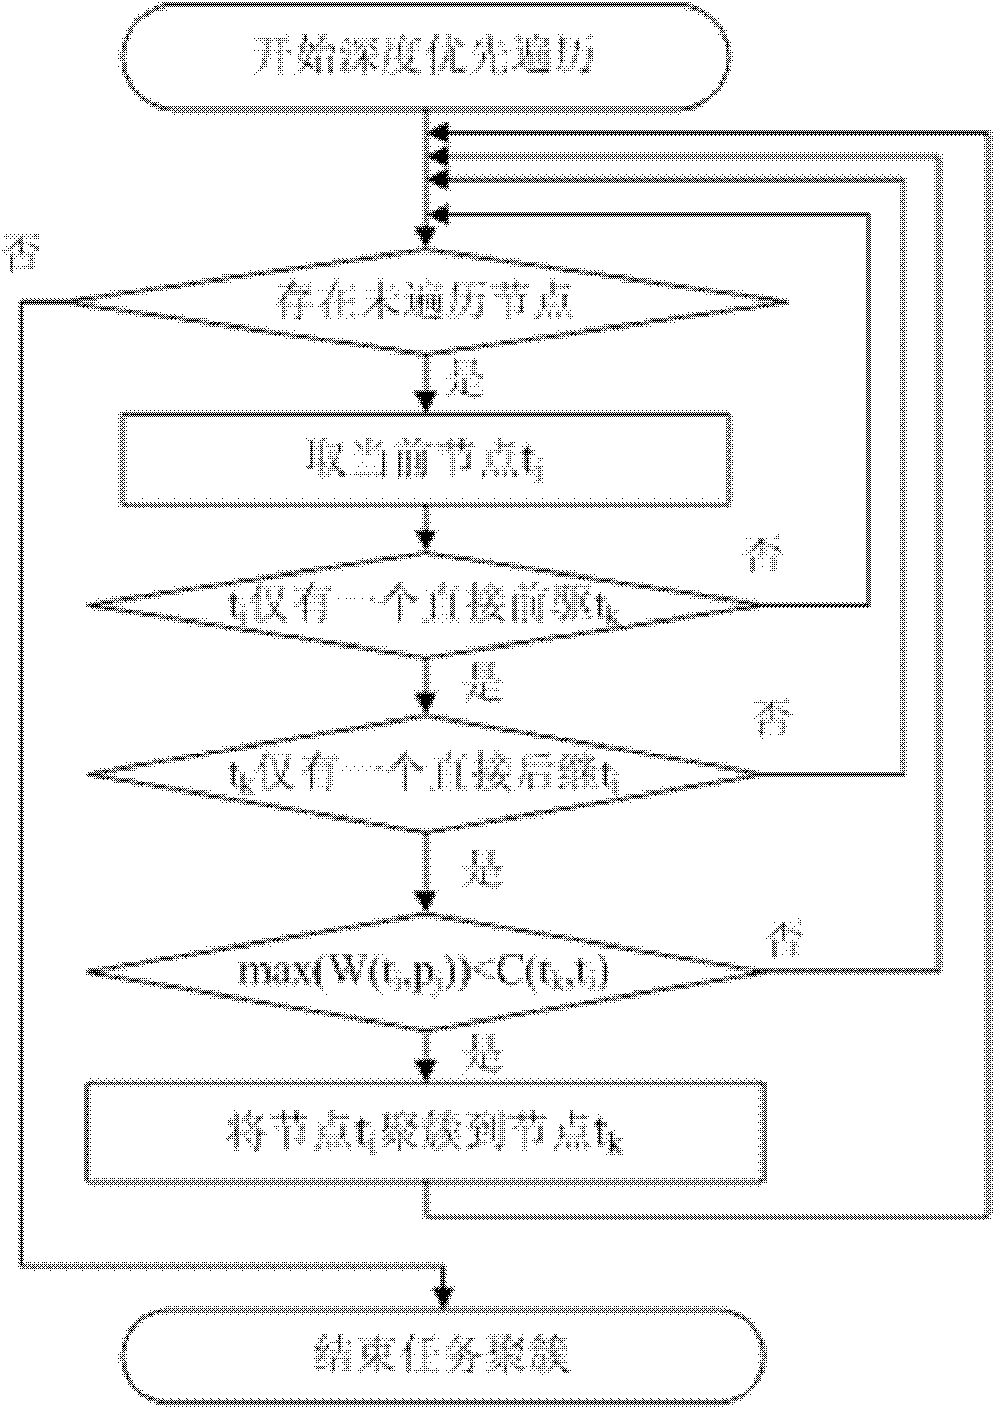 Method for high-efficiency task scheduling of heterogeneous multi-core processor